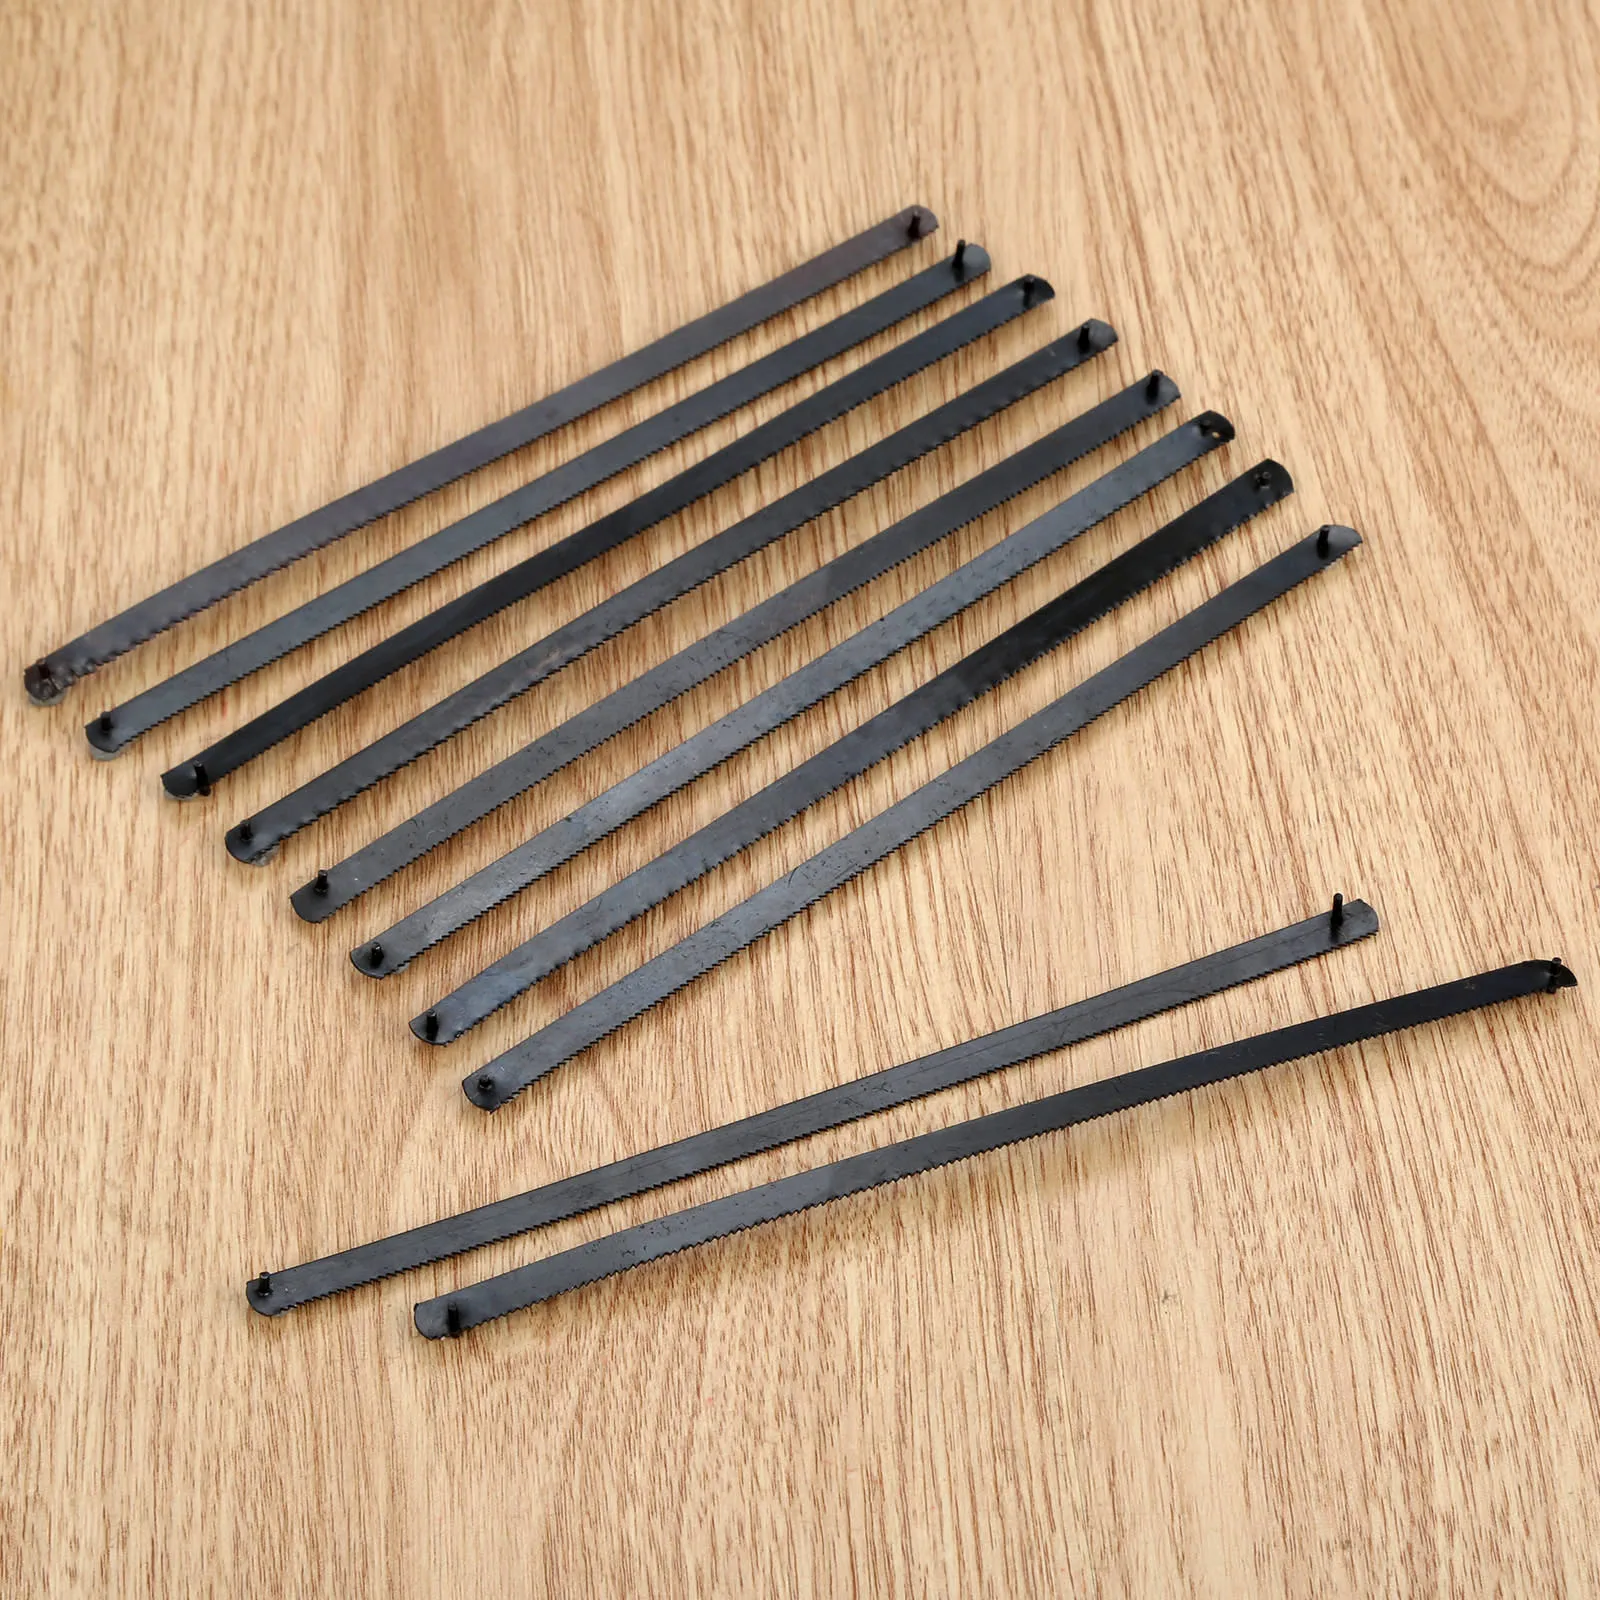 

10pcs/set 6 inch 24T Mini Hacksaw Blades Multifunctional Carbon Steel Hand DIY Model Manual Woodworking Saw Blade 150mm Tools